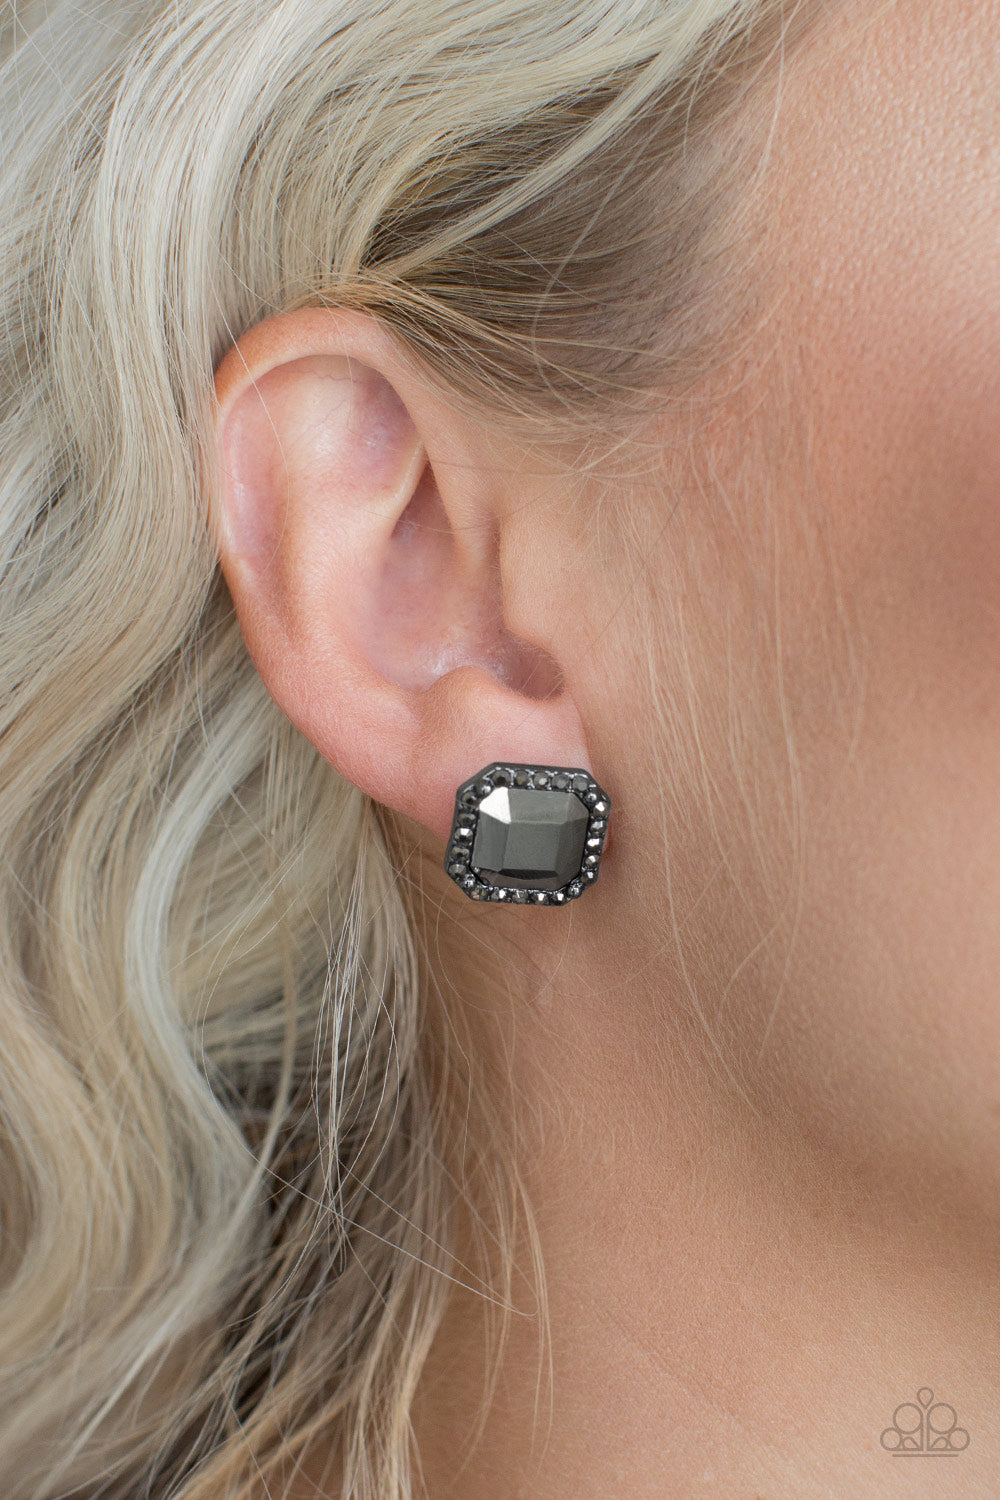 Paparazzi Act Your AGELESS - Black Hematite Gem Rhinestones - Post Earrings - $5 Jewelry With Ashley Swint